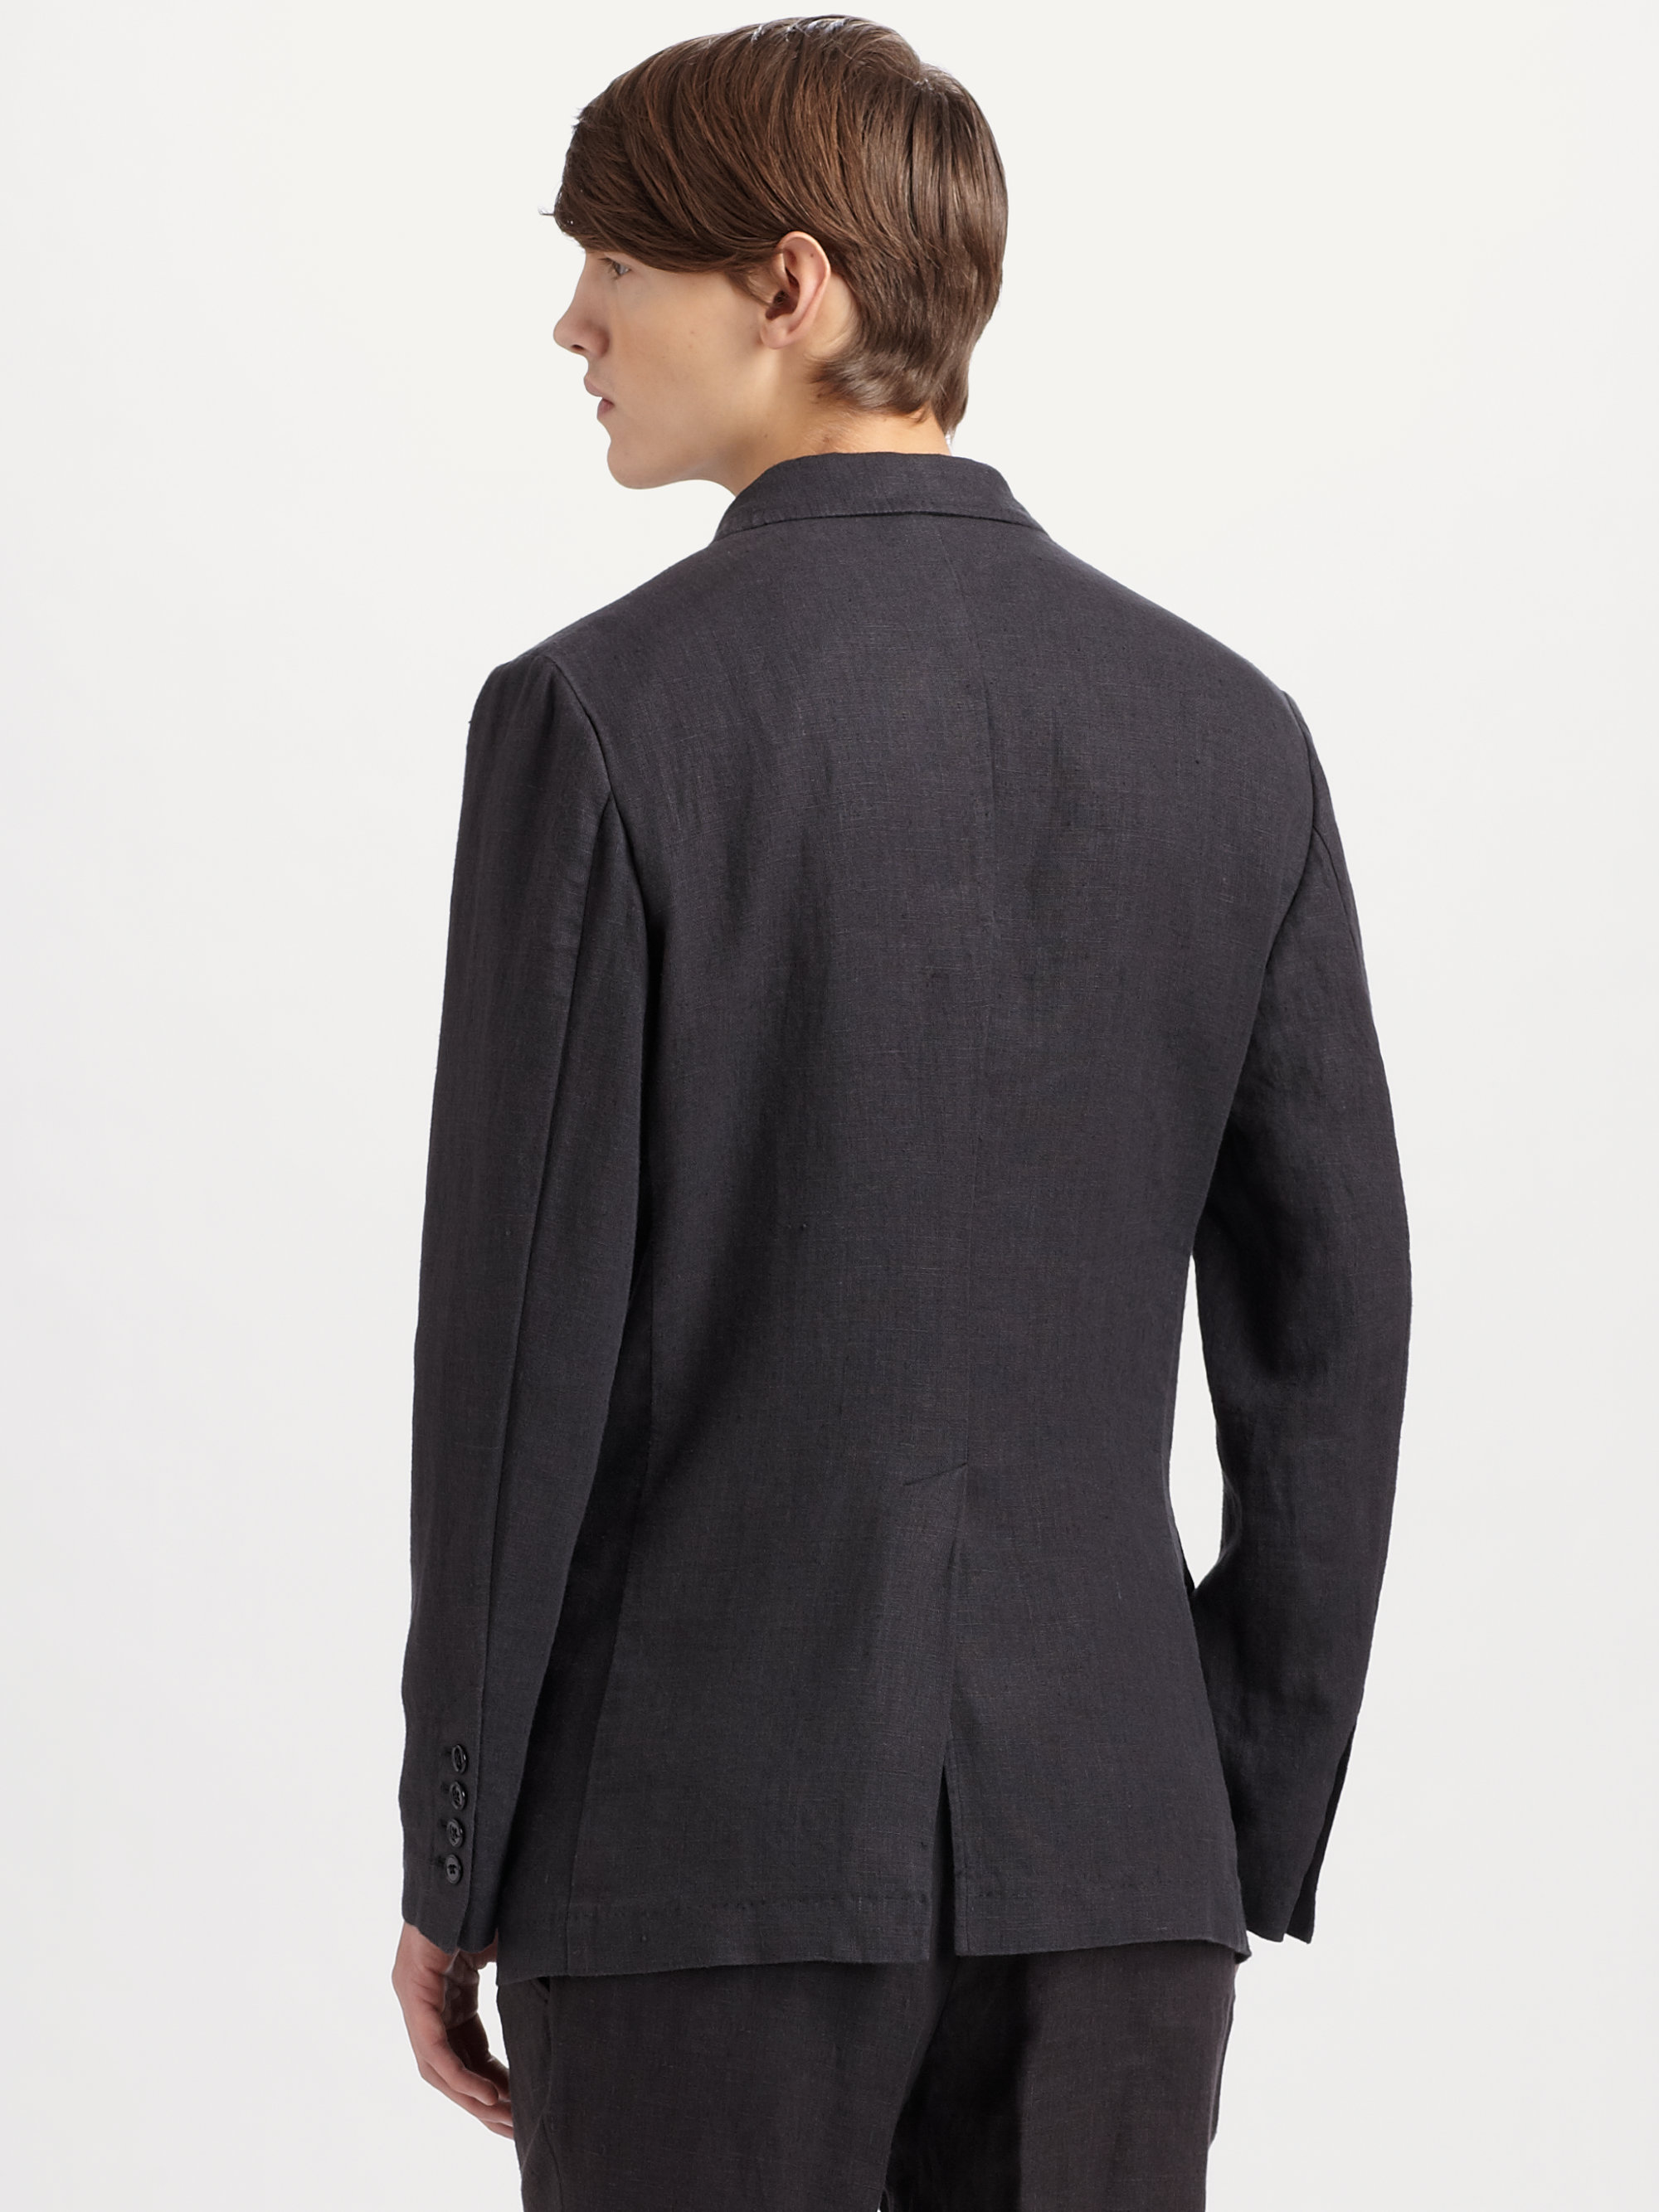 Lyst - Dolce & gabbana Linen Blazer in Black for Men